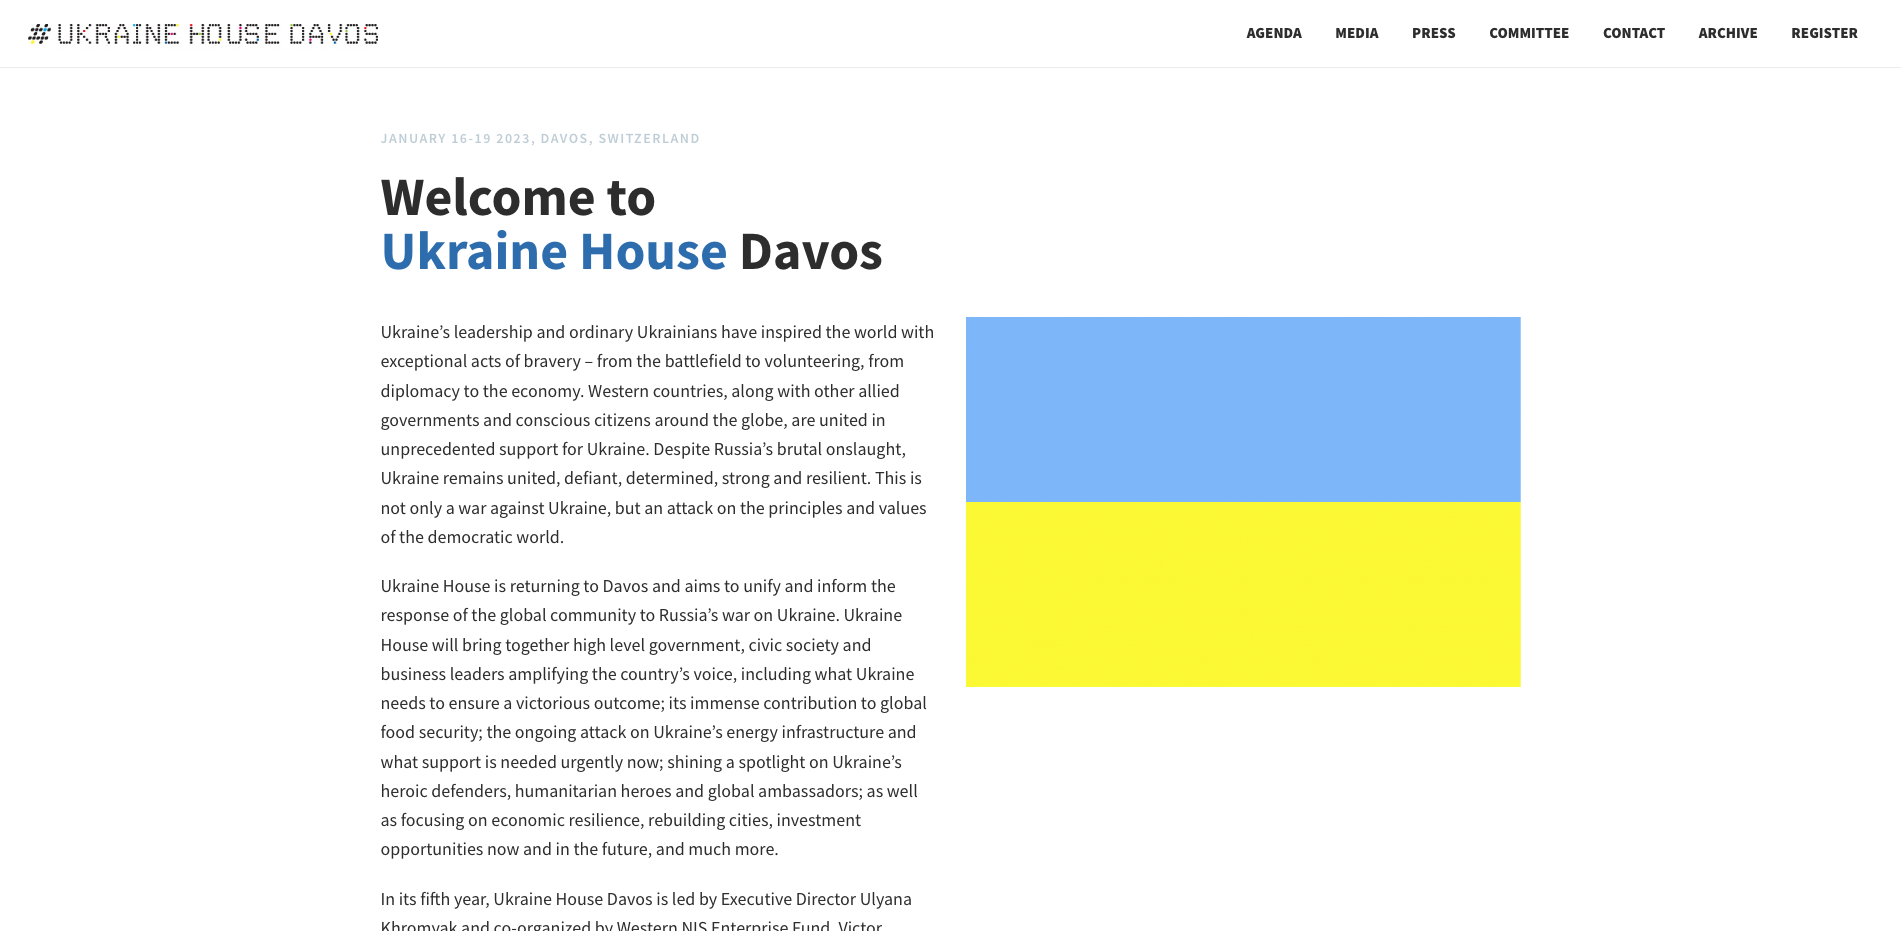 Ukraine House Davos 2023 image pic